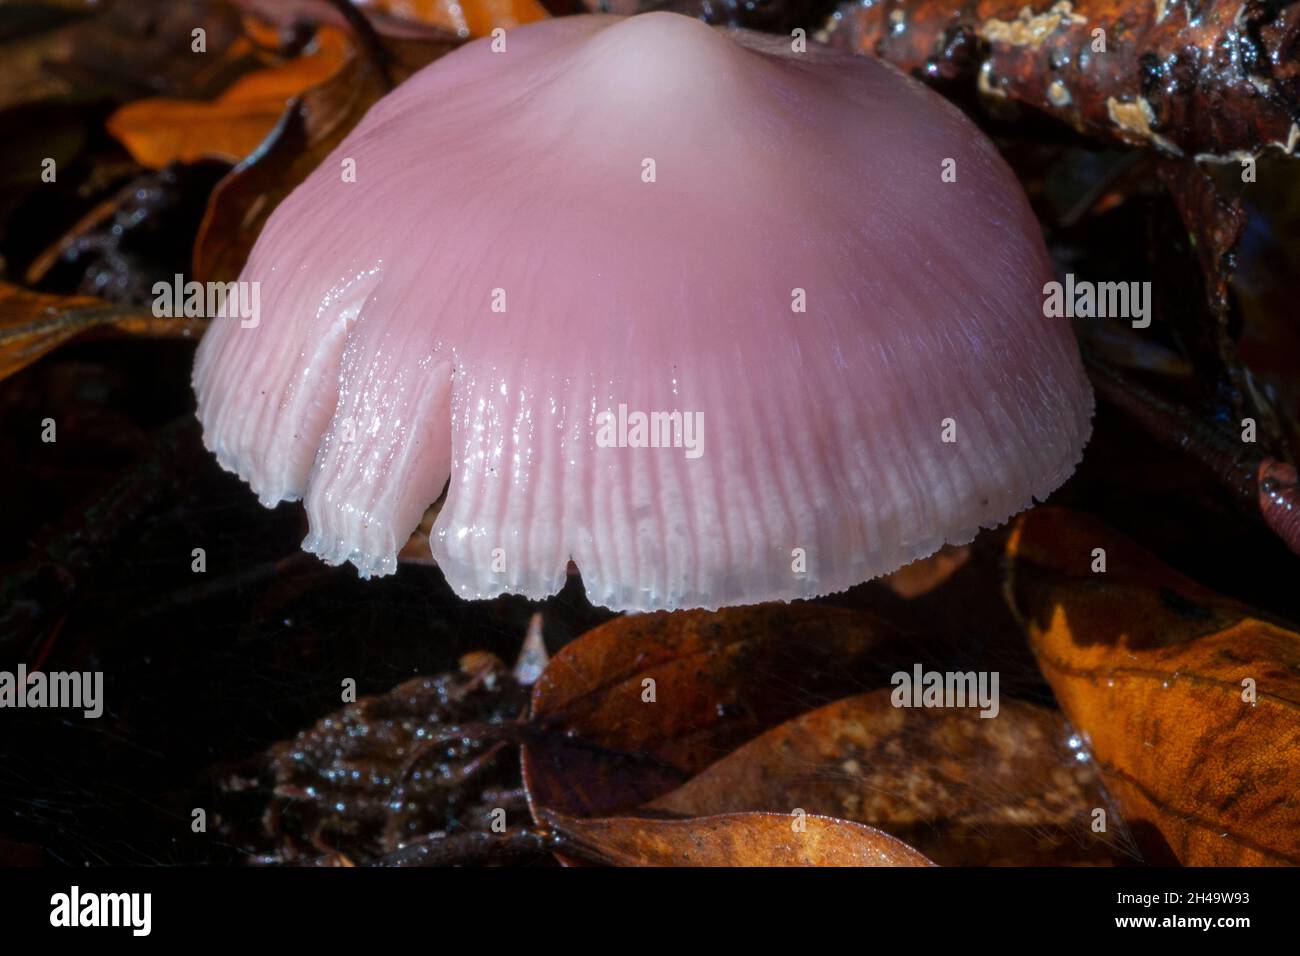 Rosy Bonnet mushrooms on a woodland floor Stock Photo